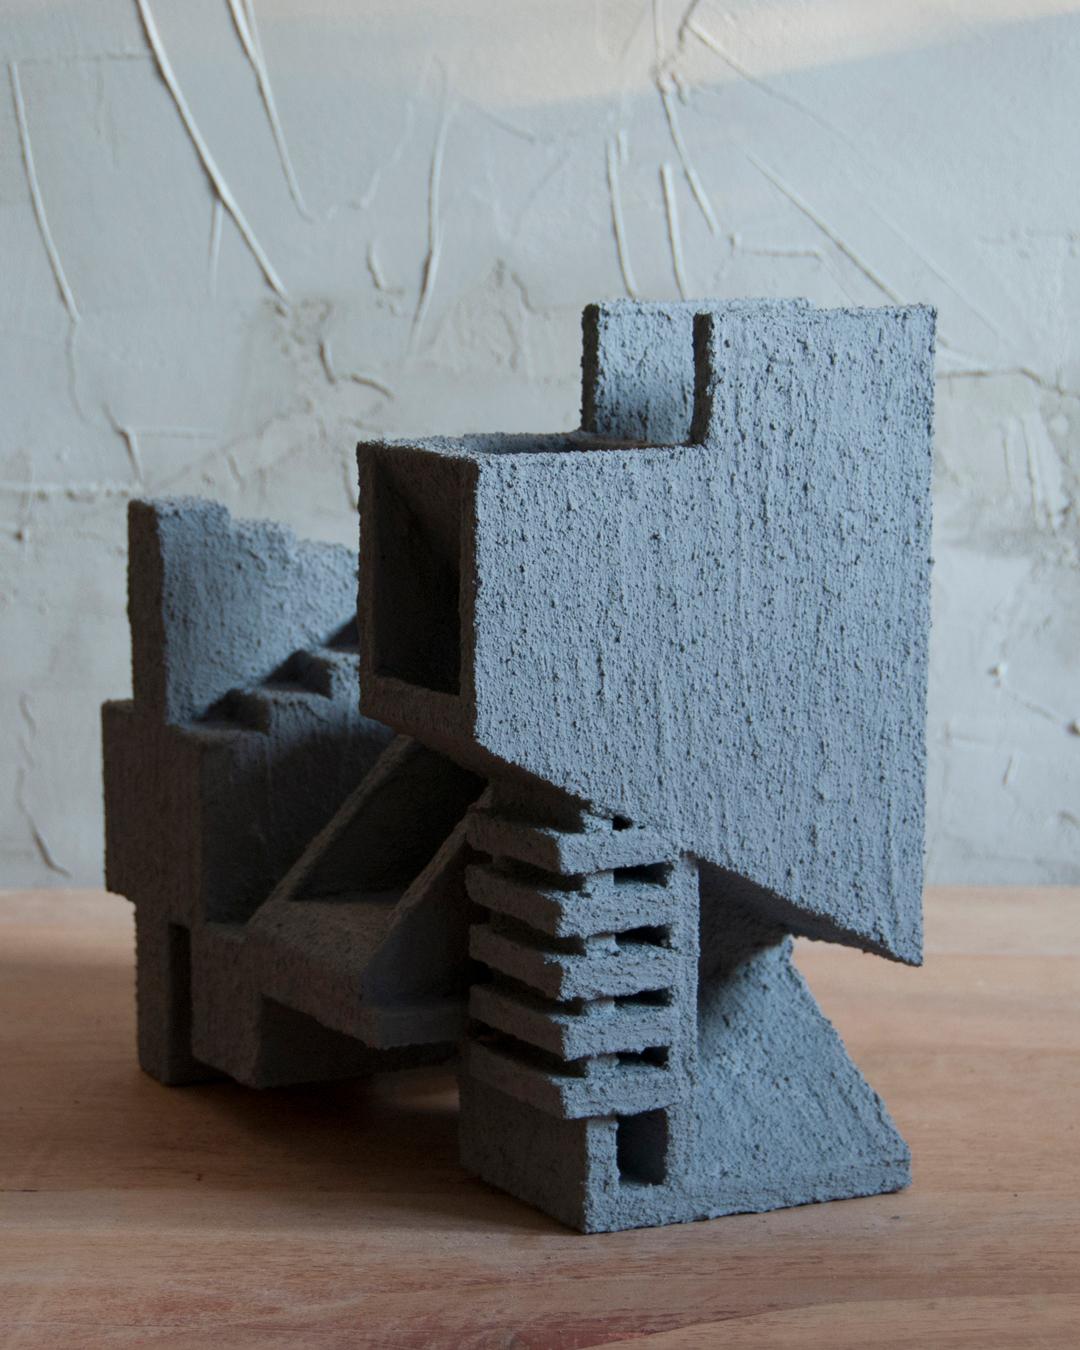 Spanish Sculpture Contemporary Geometric Constructivist Wood Concrete Grey - The Dog For Sale